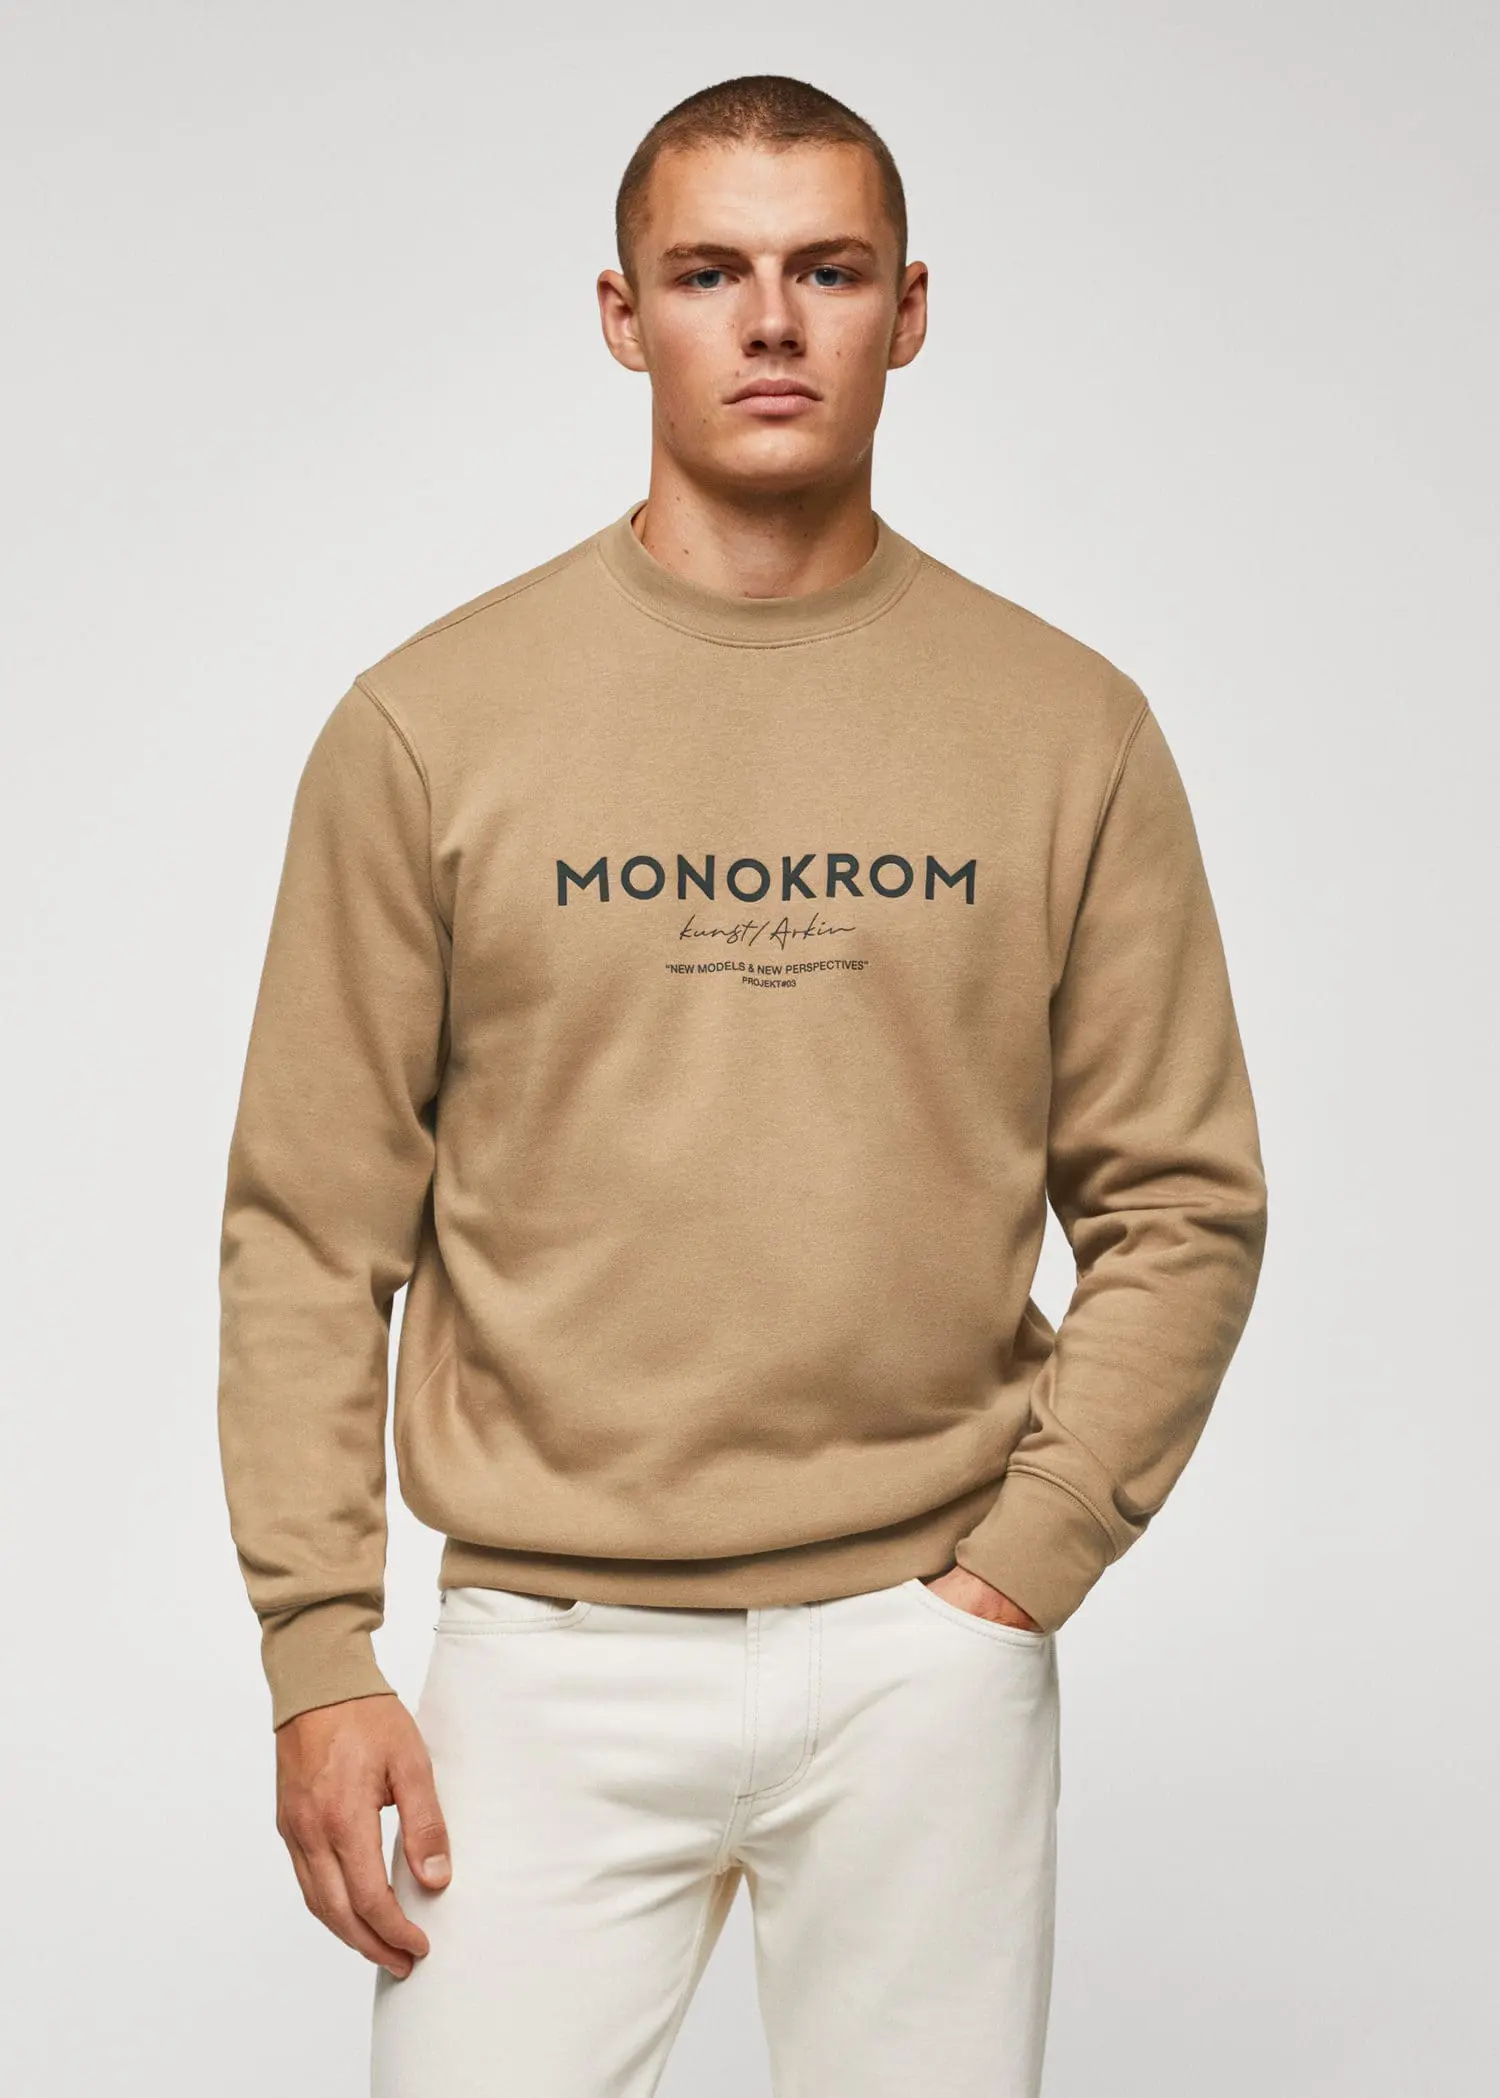 Mango Cotton sweatshirt with text. 2